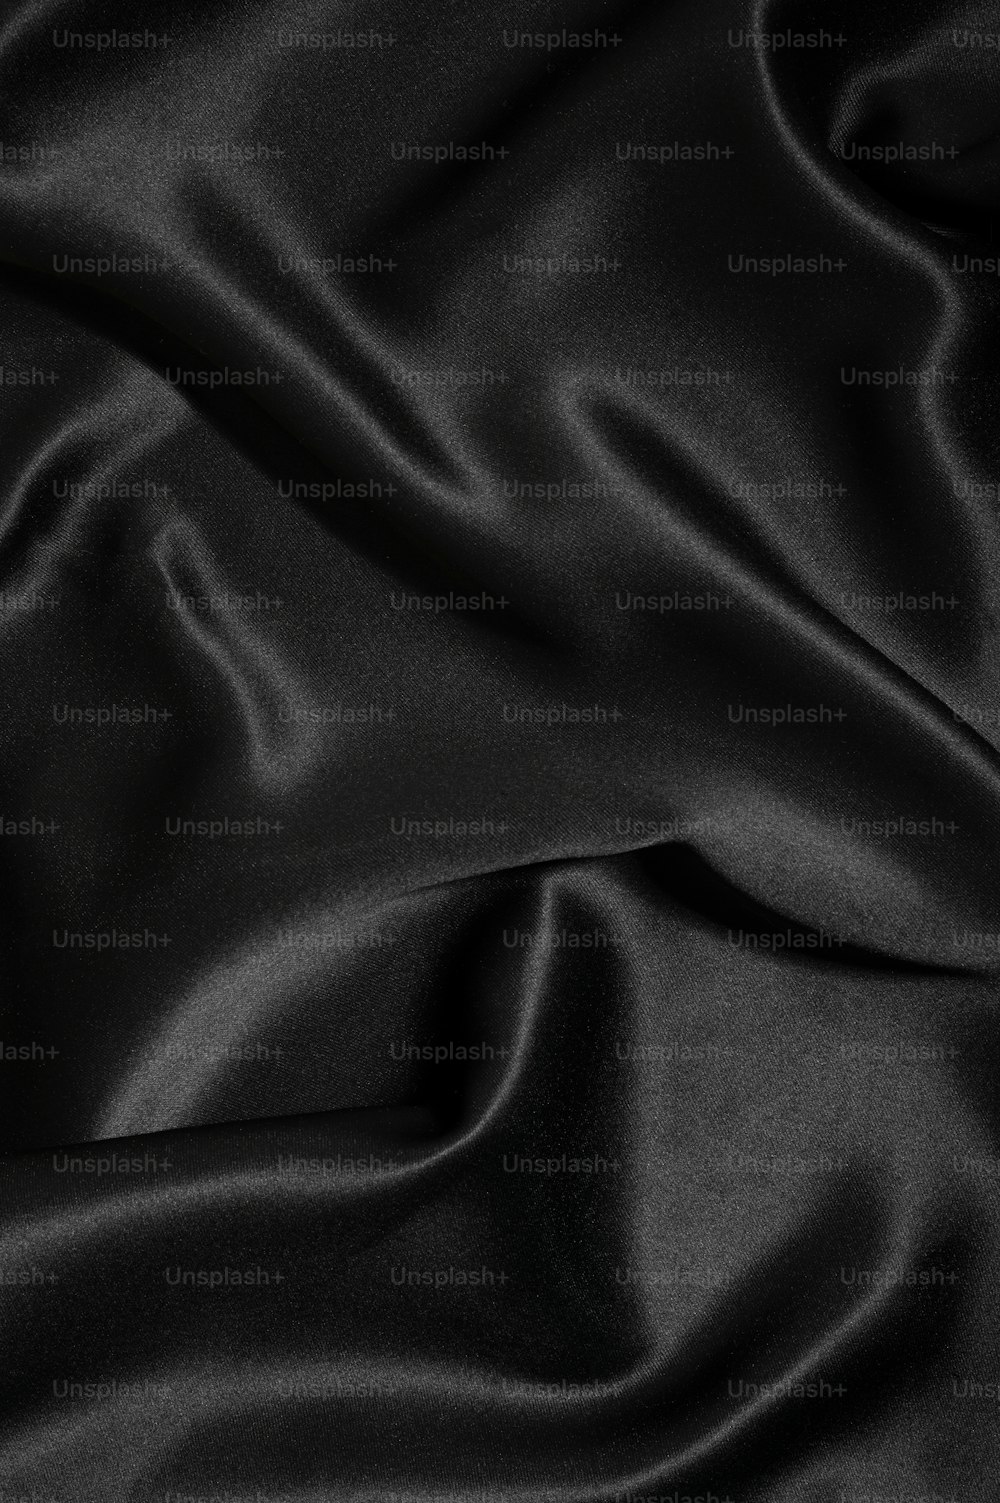 a close up of a black satin fabric